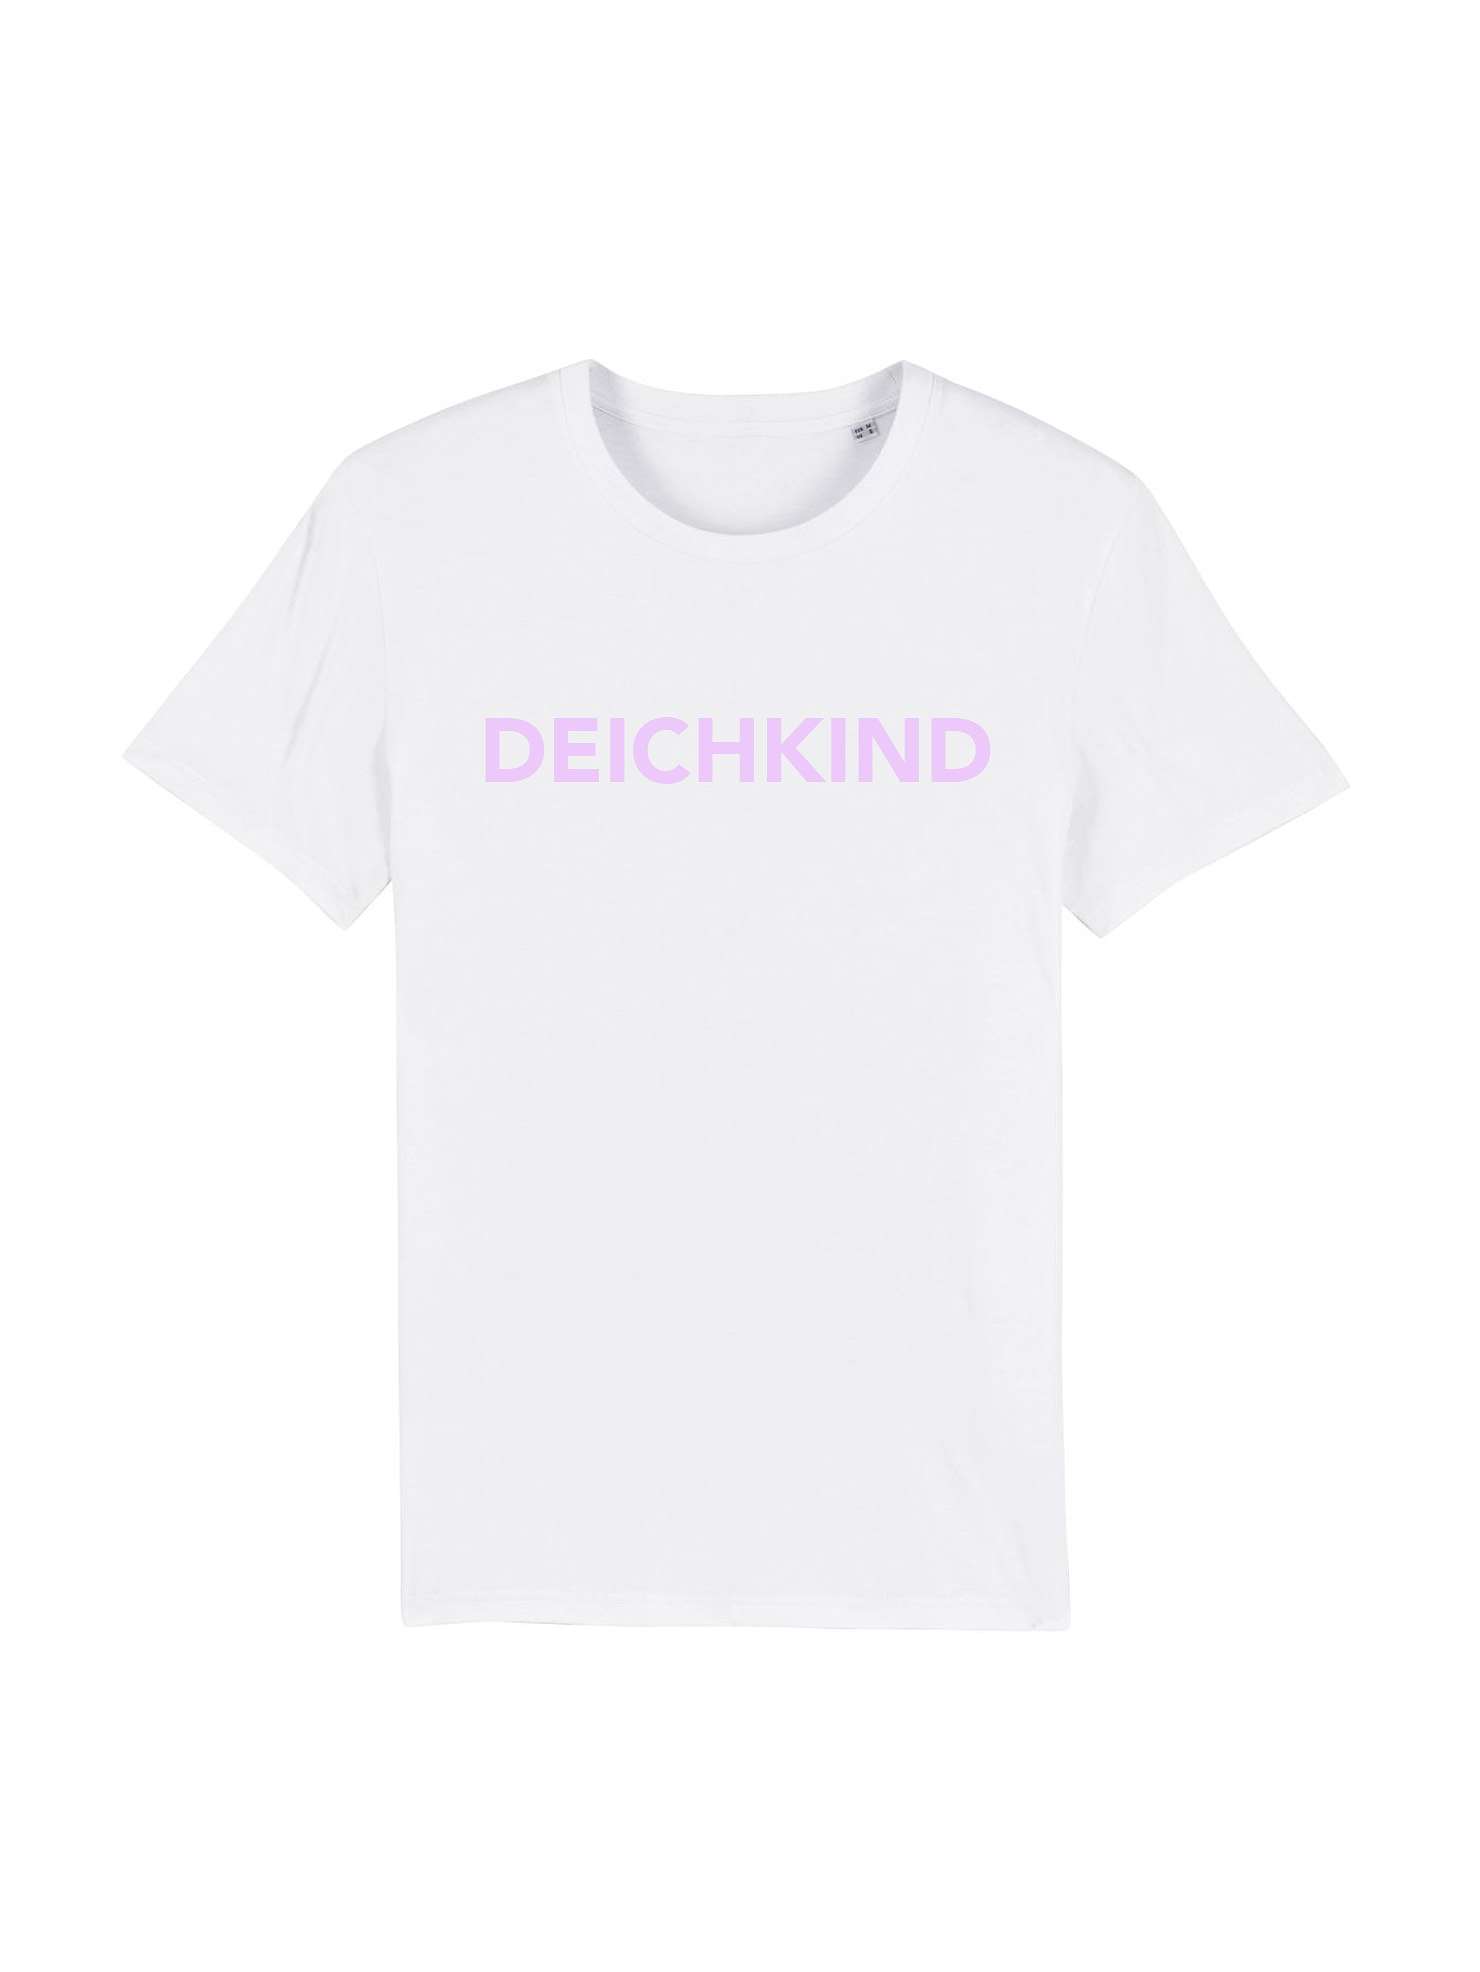 DEICHKIND - T-Shirt - - Weiß/Rosa Schriftzug